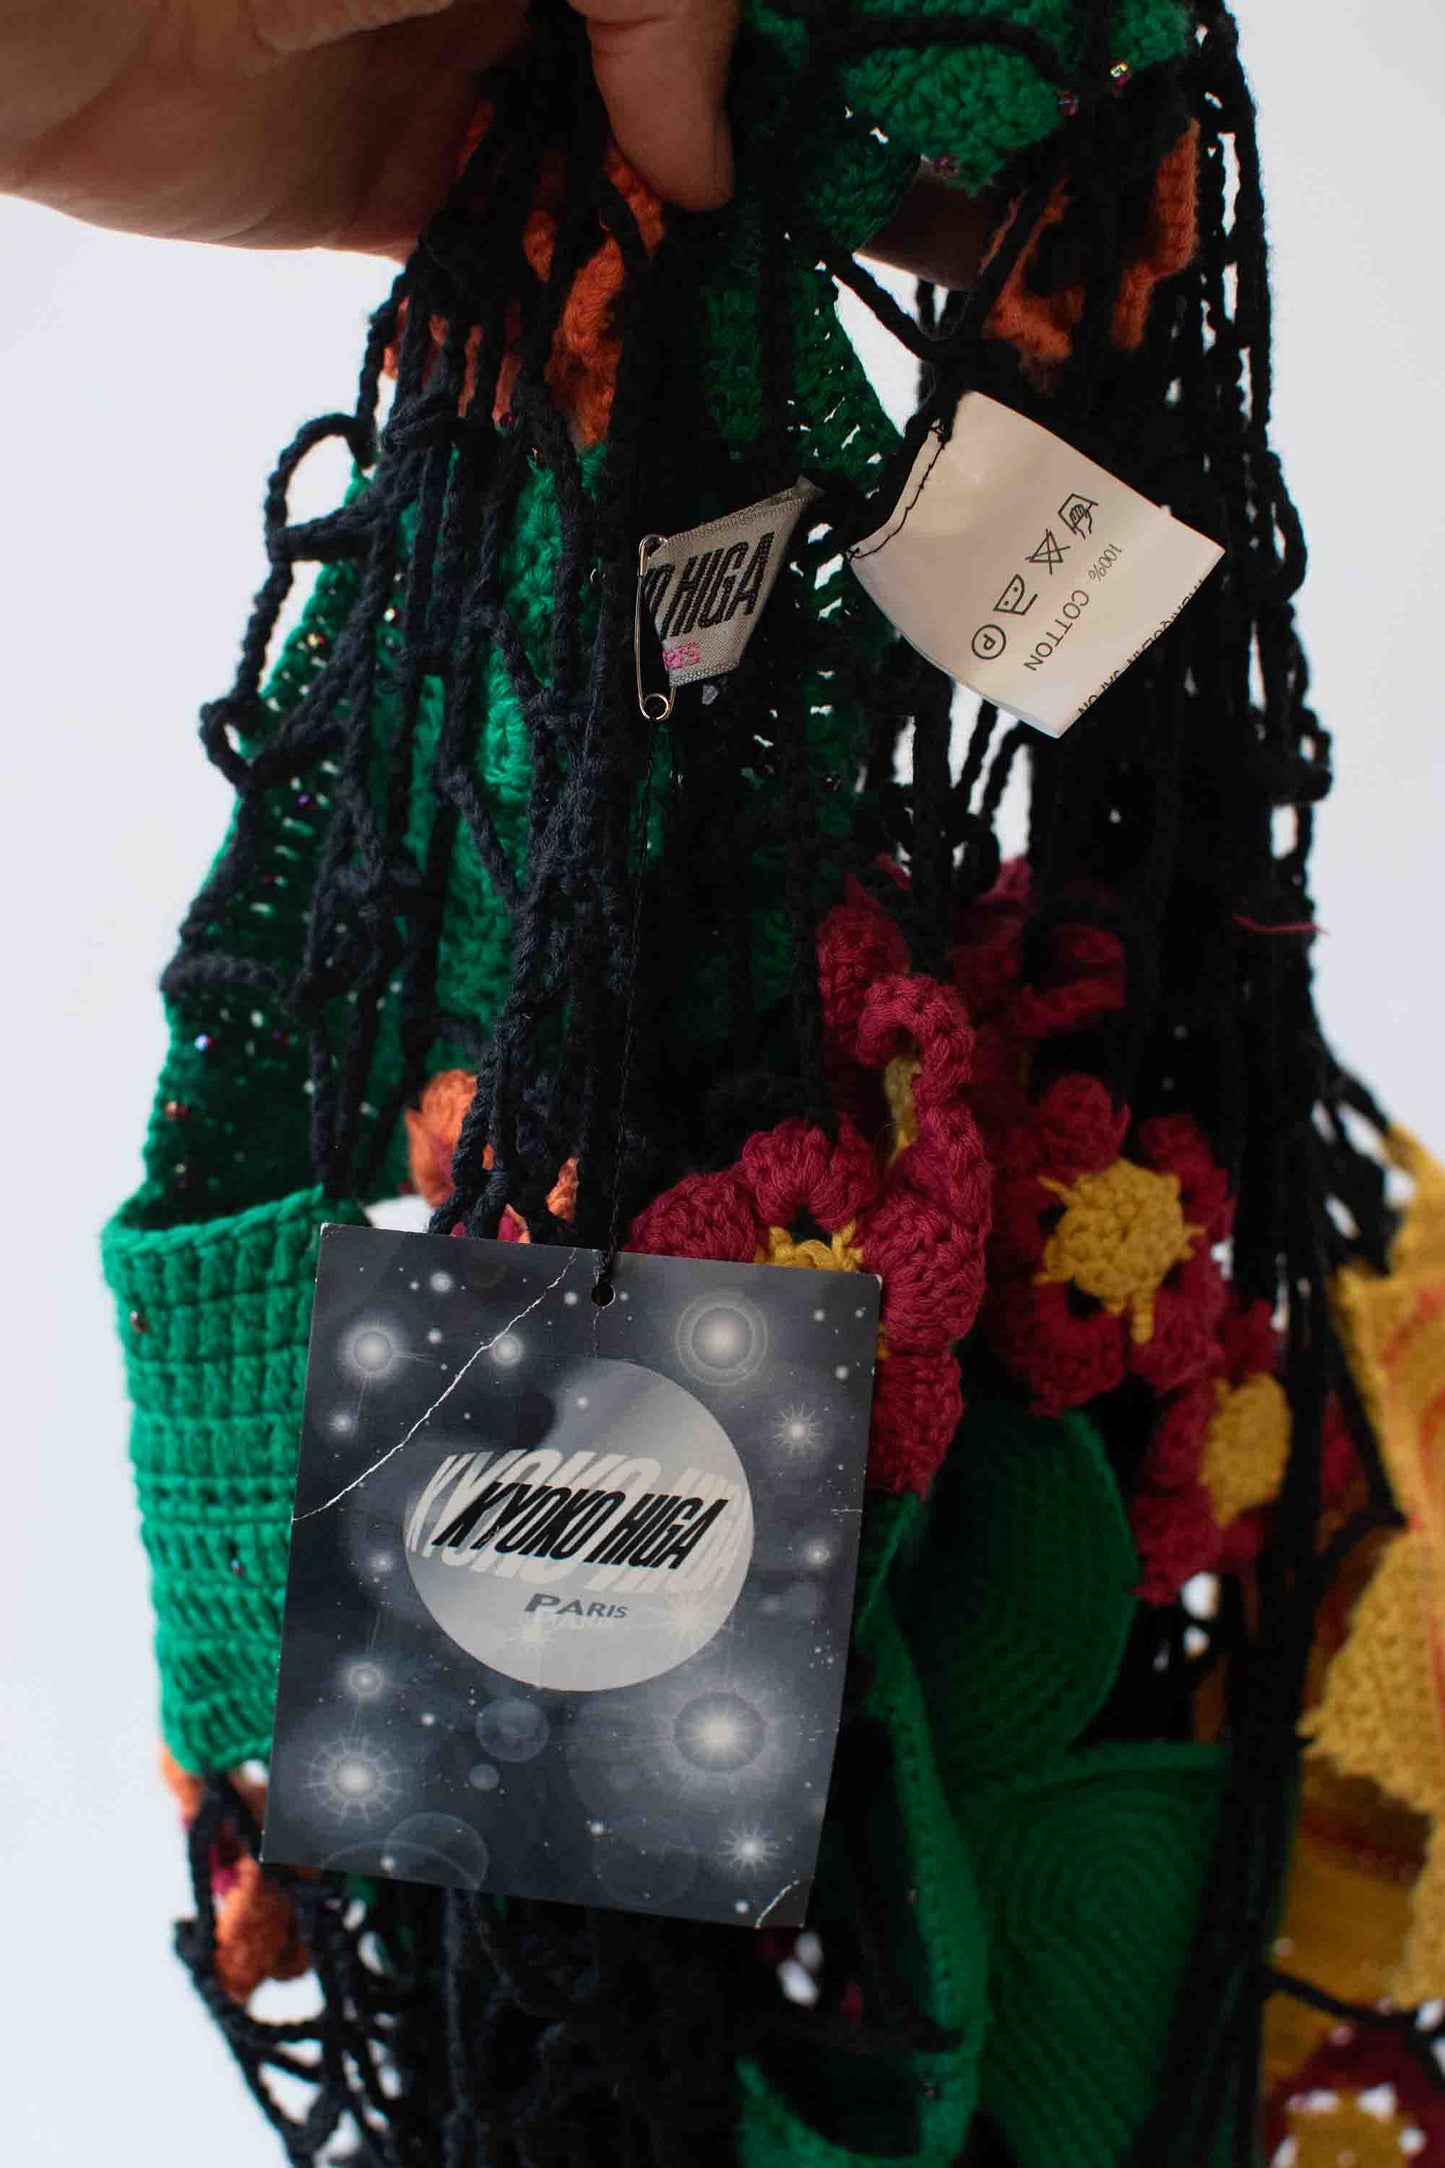 1990s - y2k Cactus Crochet Tunic |  Kyoko Higa